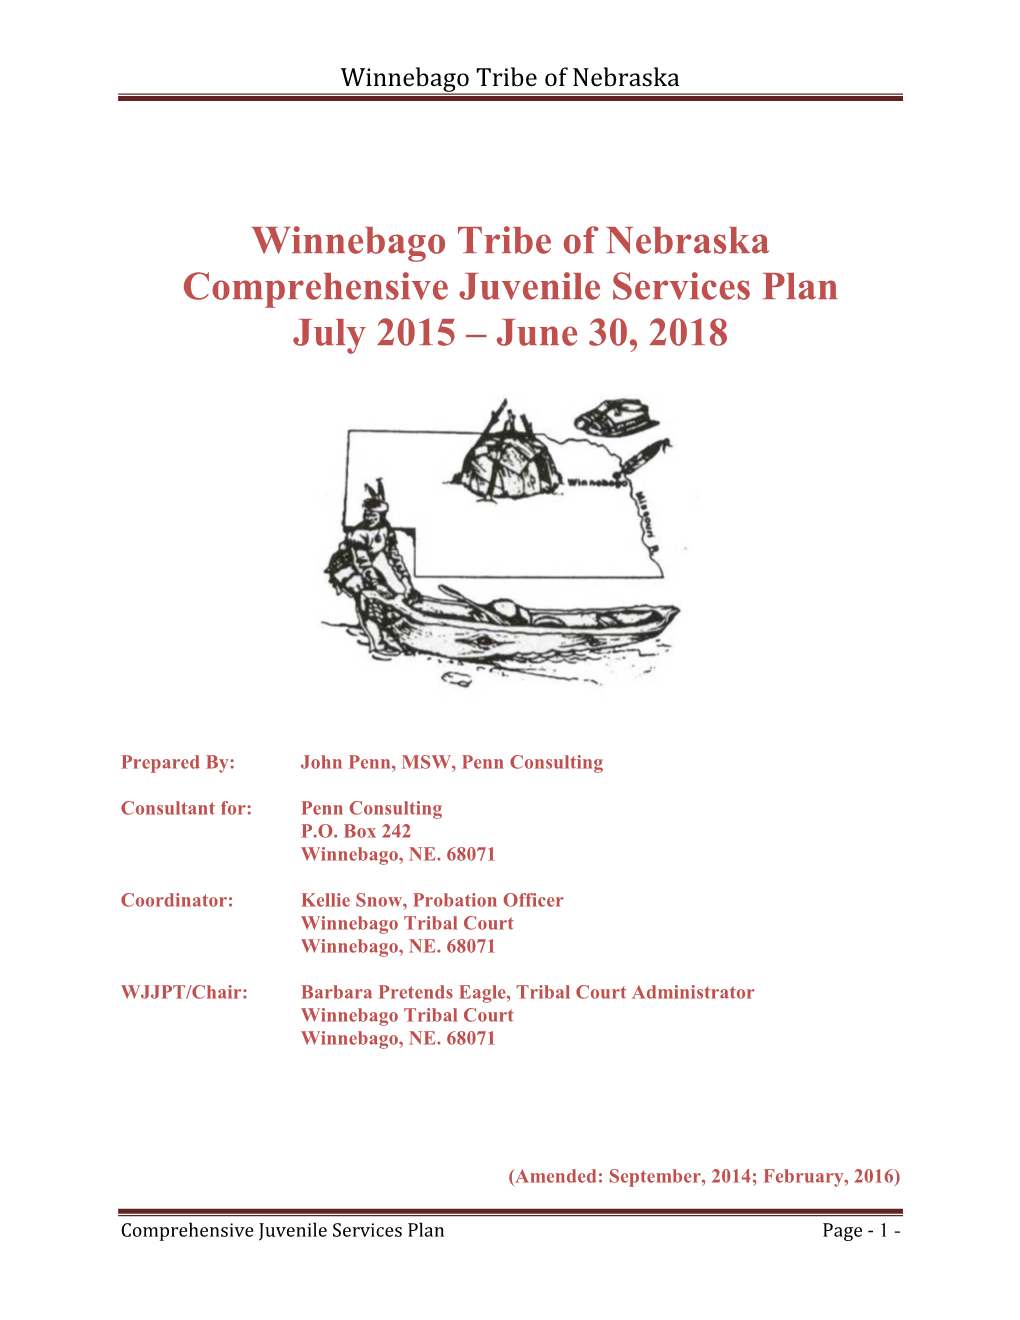 Winnebago Tribe of Nebraska Comprehensive Juvenile Services Plan July 2015 – June 30, 2018